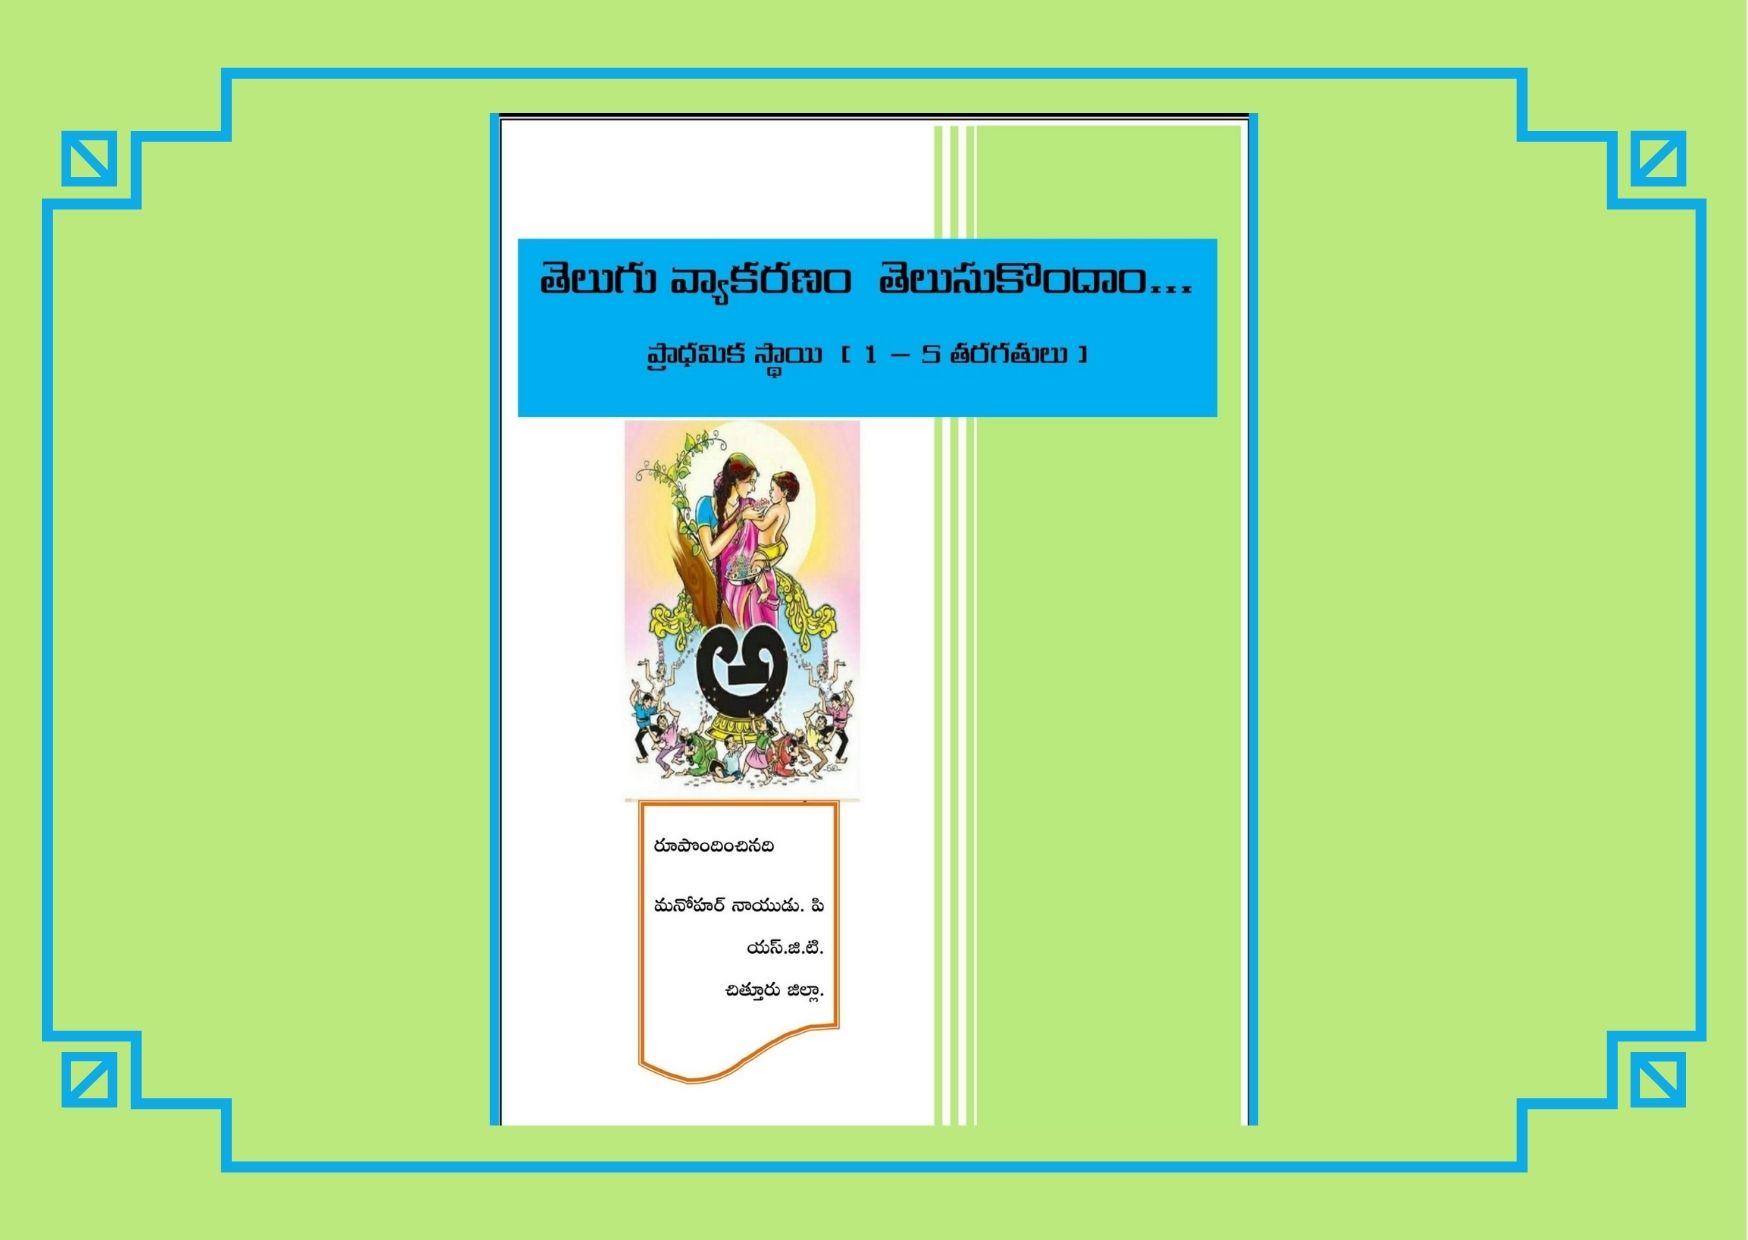 Telugu Grammar PDF Download (తెలుగు వ్యాకరణం) for Primary Classes